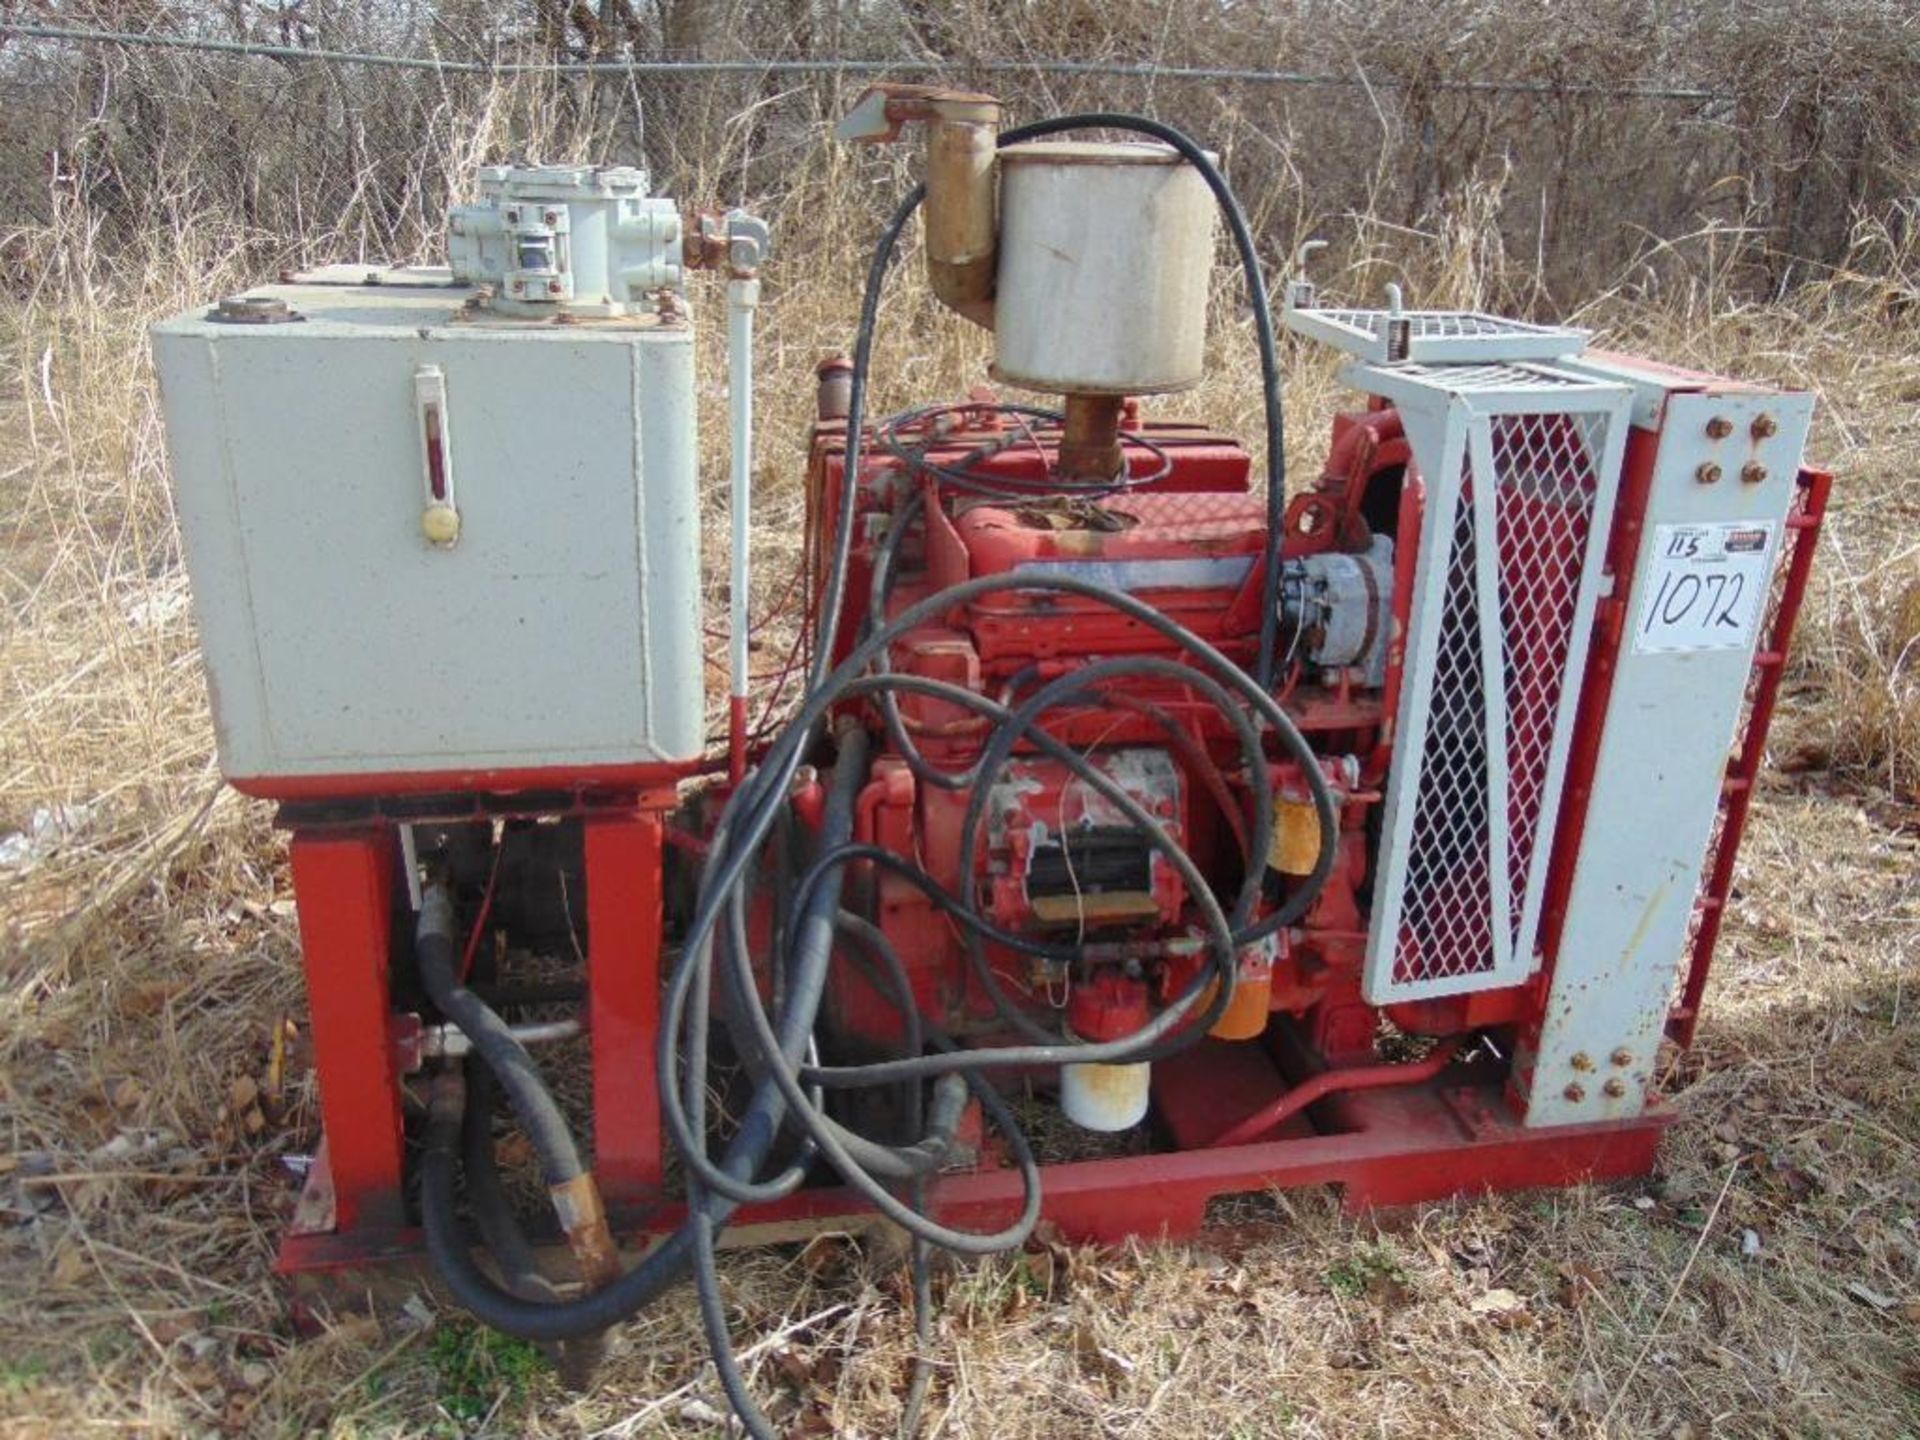 Hyd Pump Station w/ detroit diesel eng